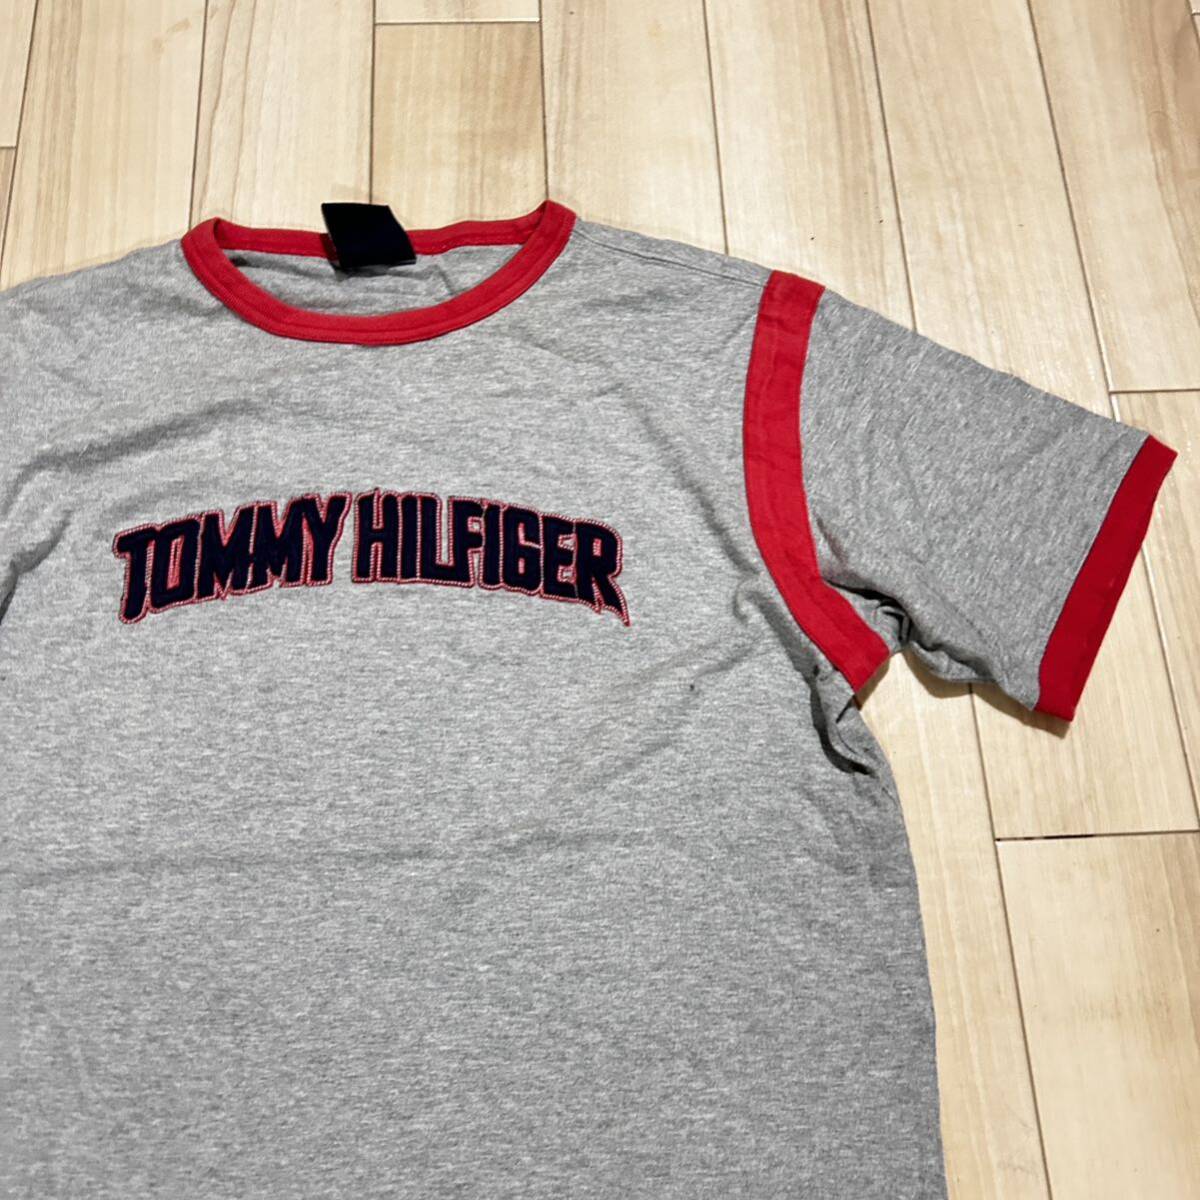 TOMMY HILFIGER/トミーヒルフィガー/半袖/リンガーT/Tシャツ/フラッグ/90s/オールド/M/Lの画像2